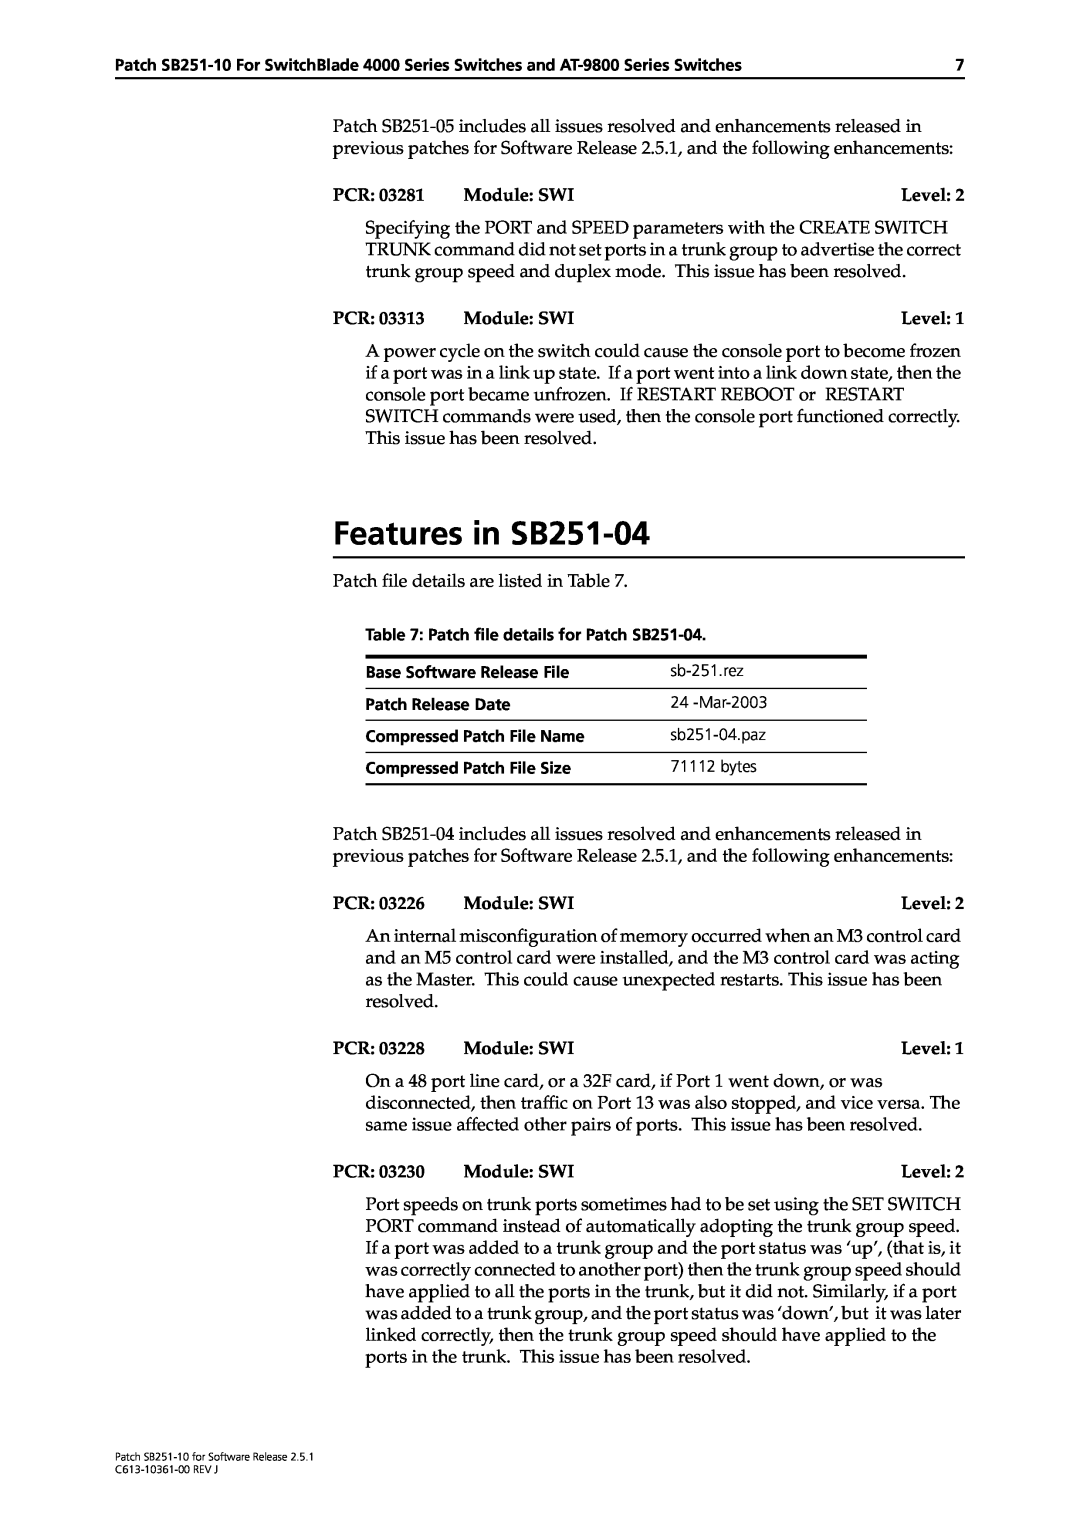 Allied Telesis SB251-10 manual Features in SB251-04, sb-251.rez, Mar-2003, sb251-04.paz, bytes 